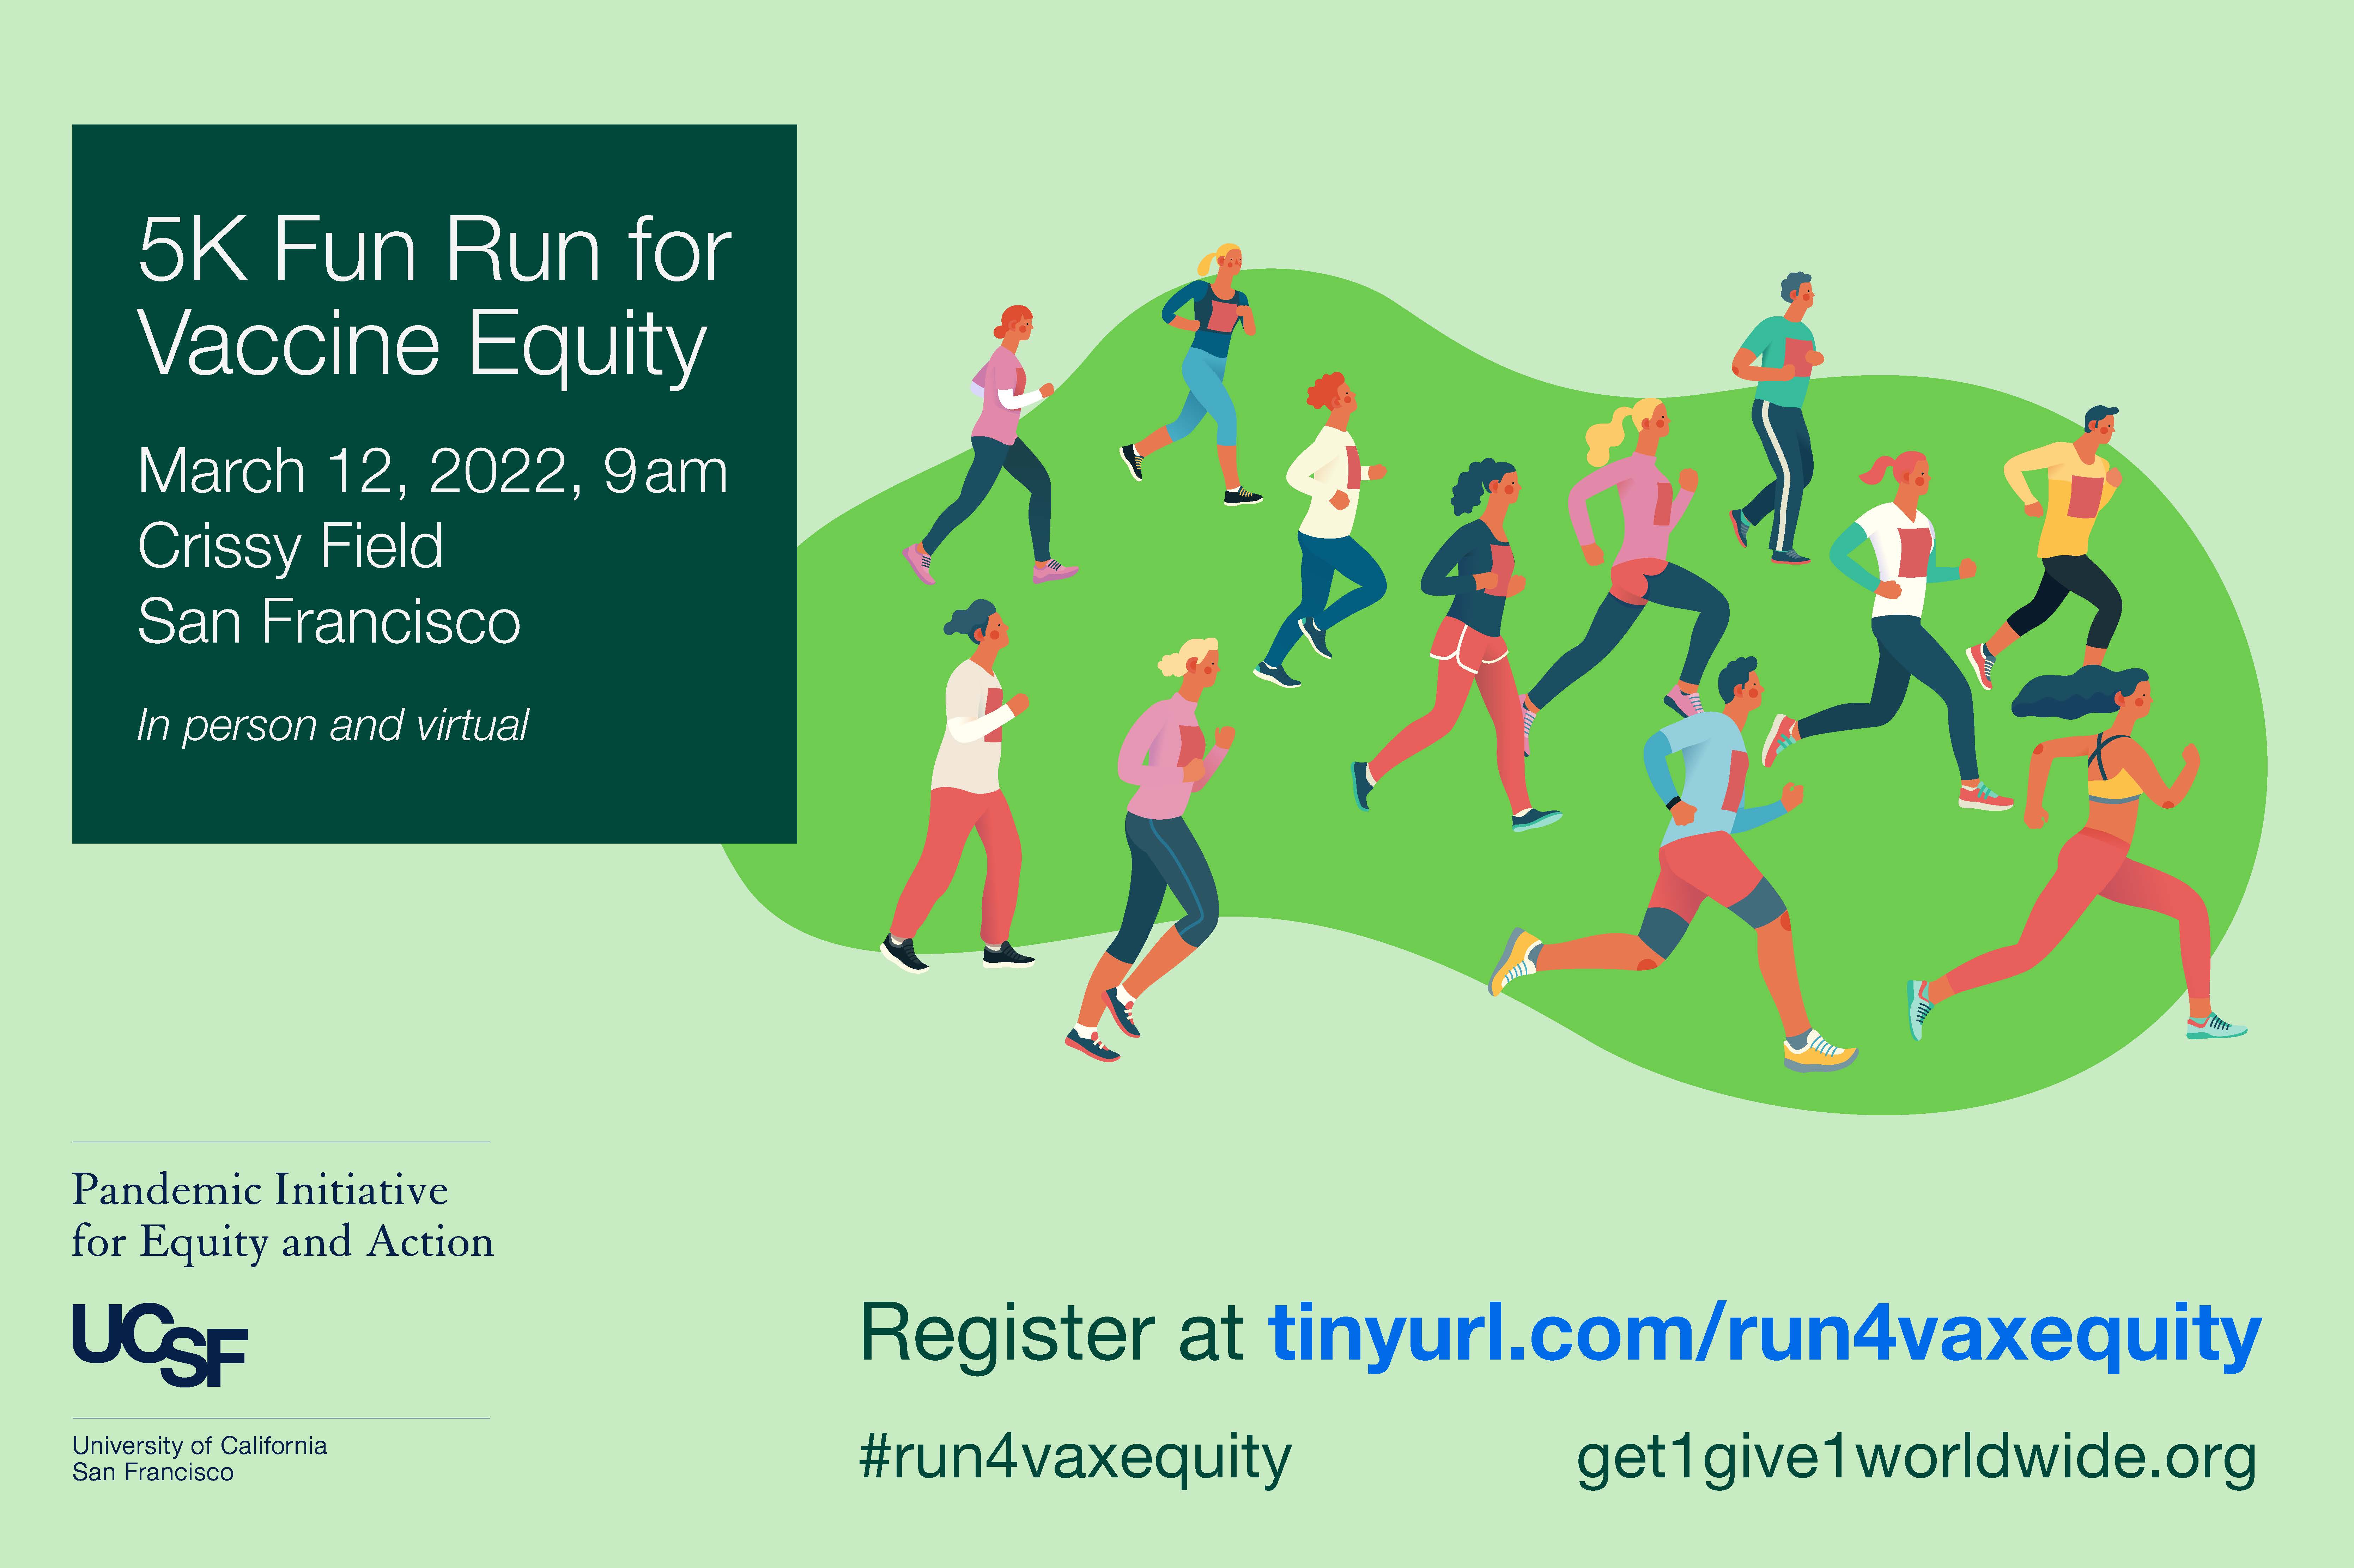 Vaccine equity 5K Fun Run